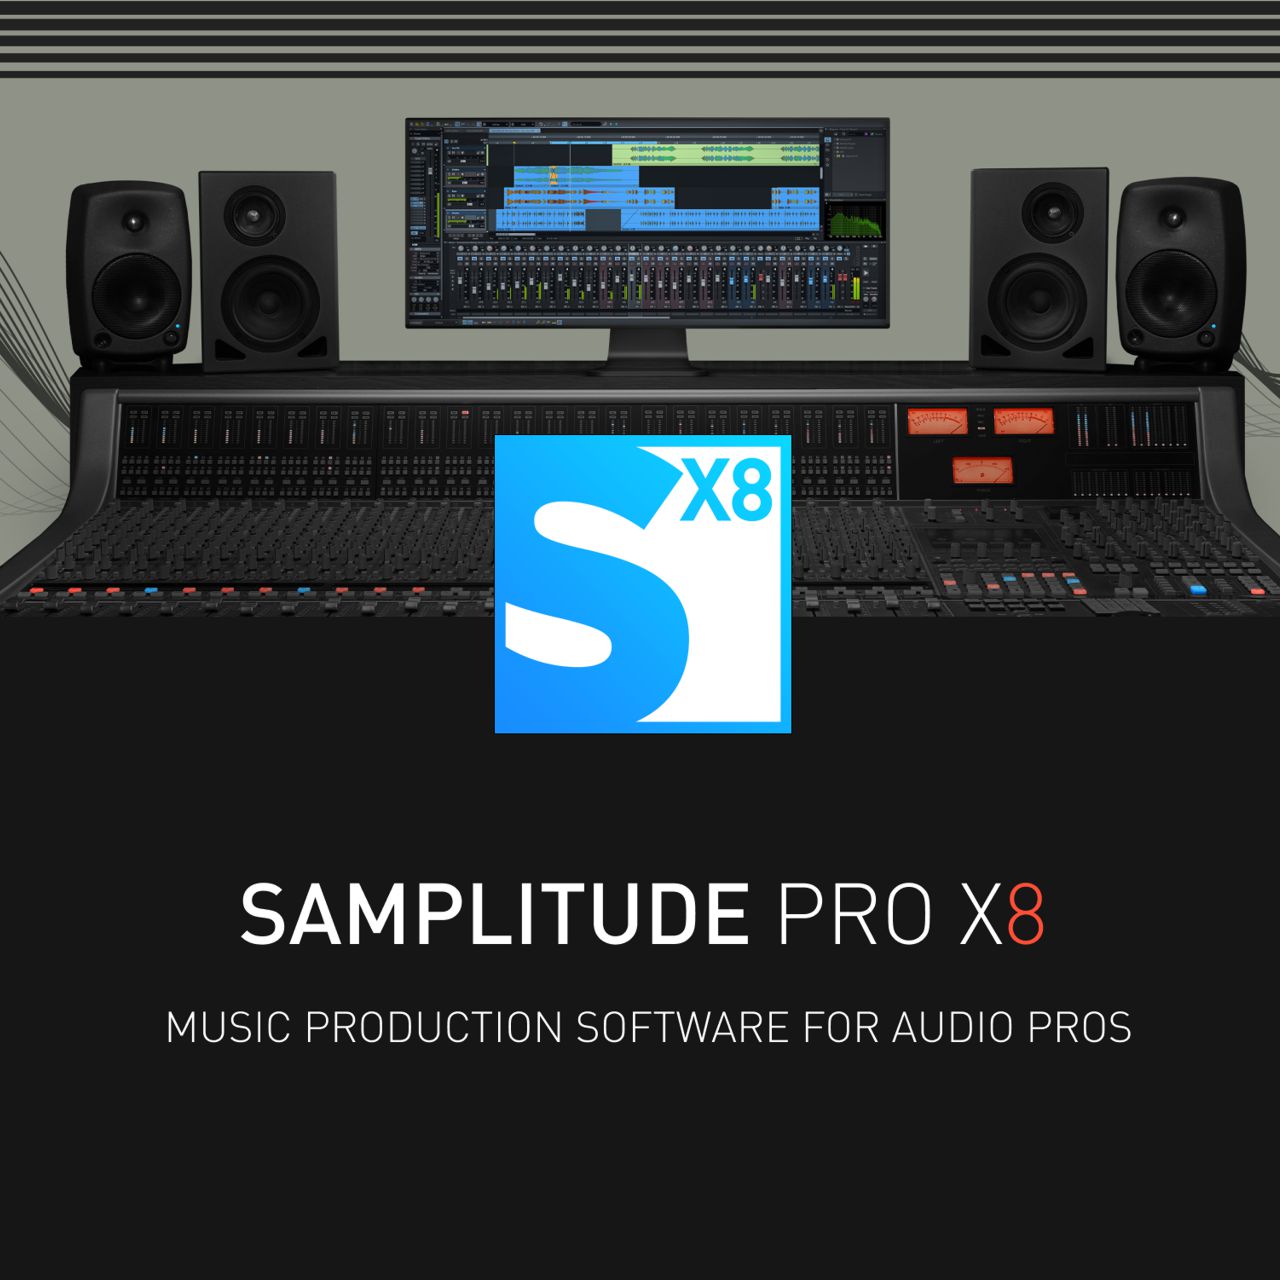 Samplitude Pro X8